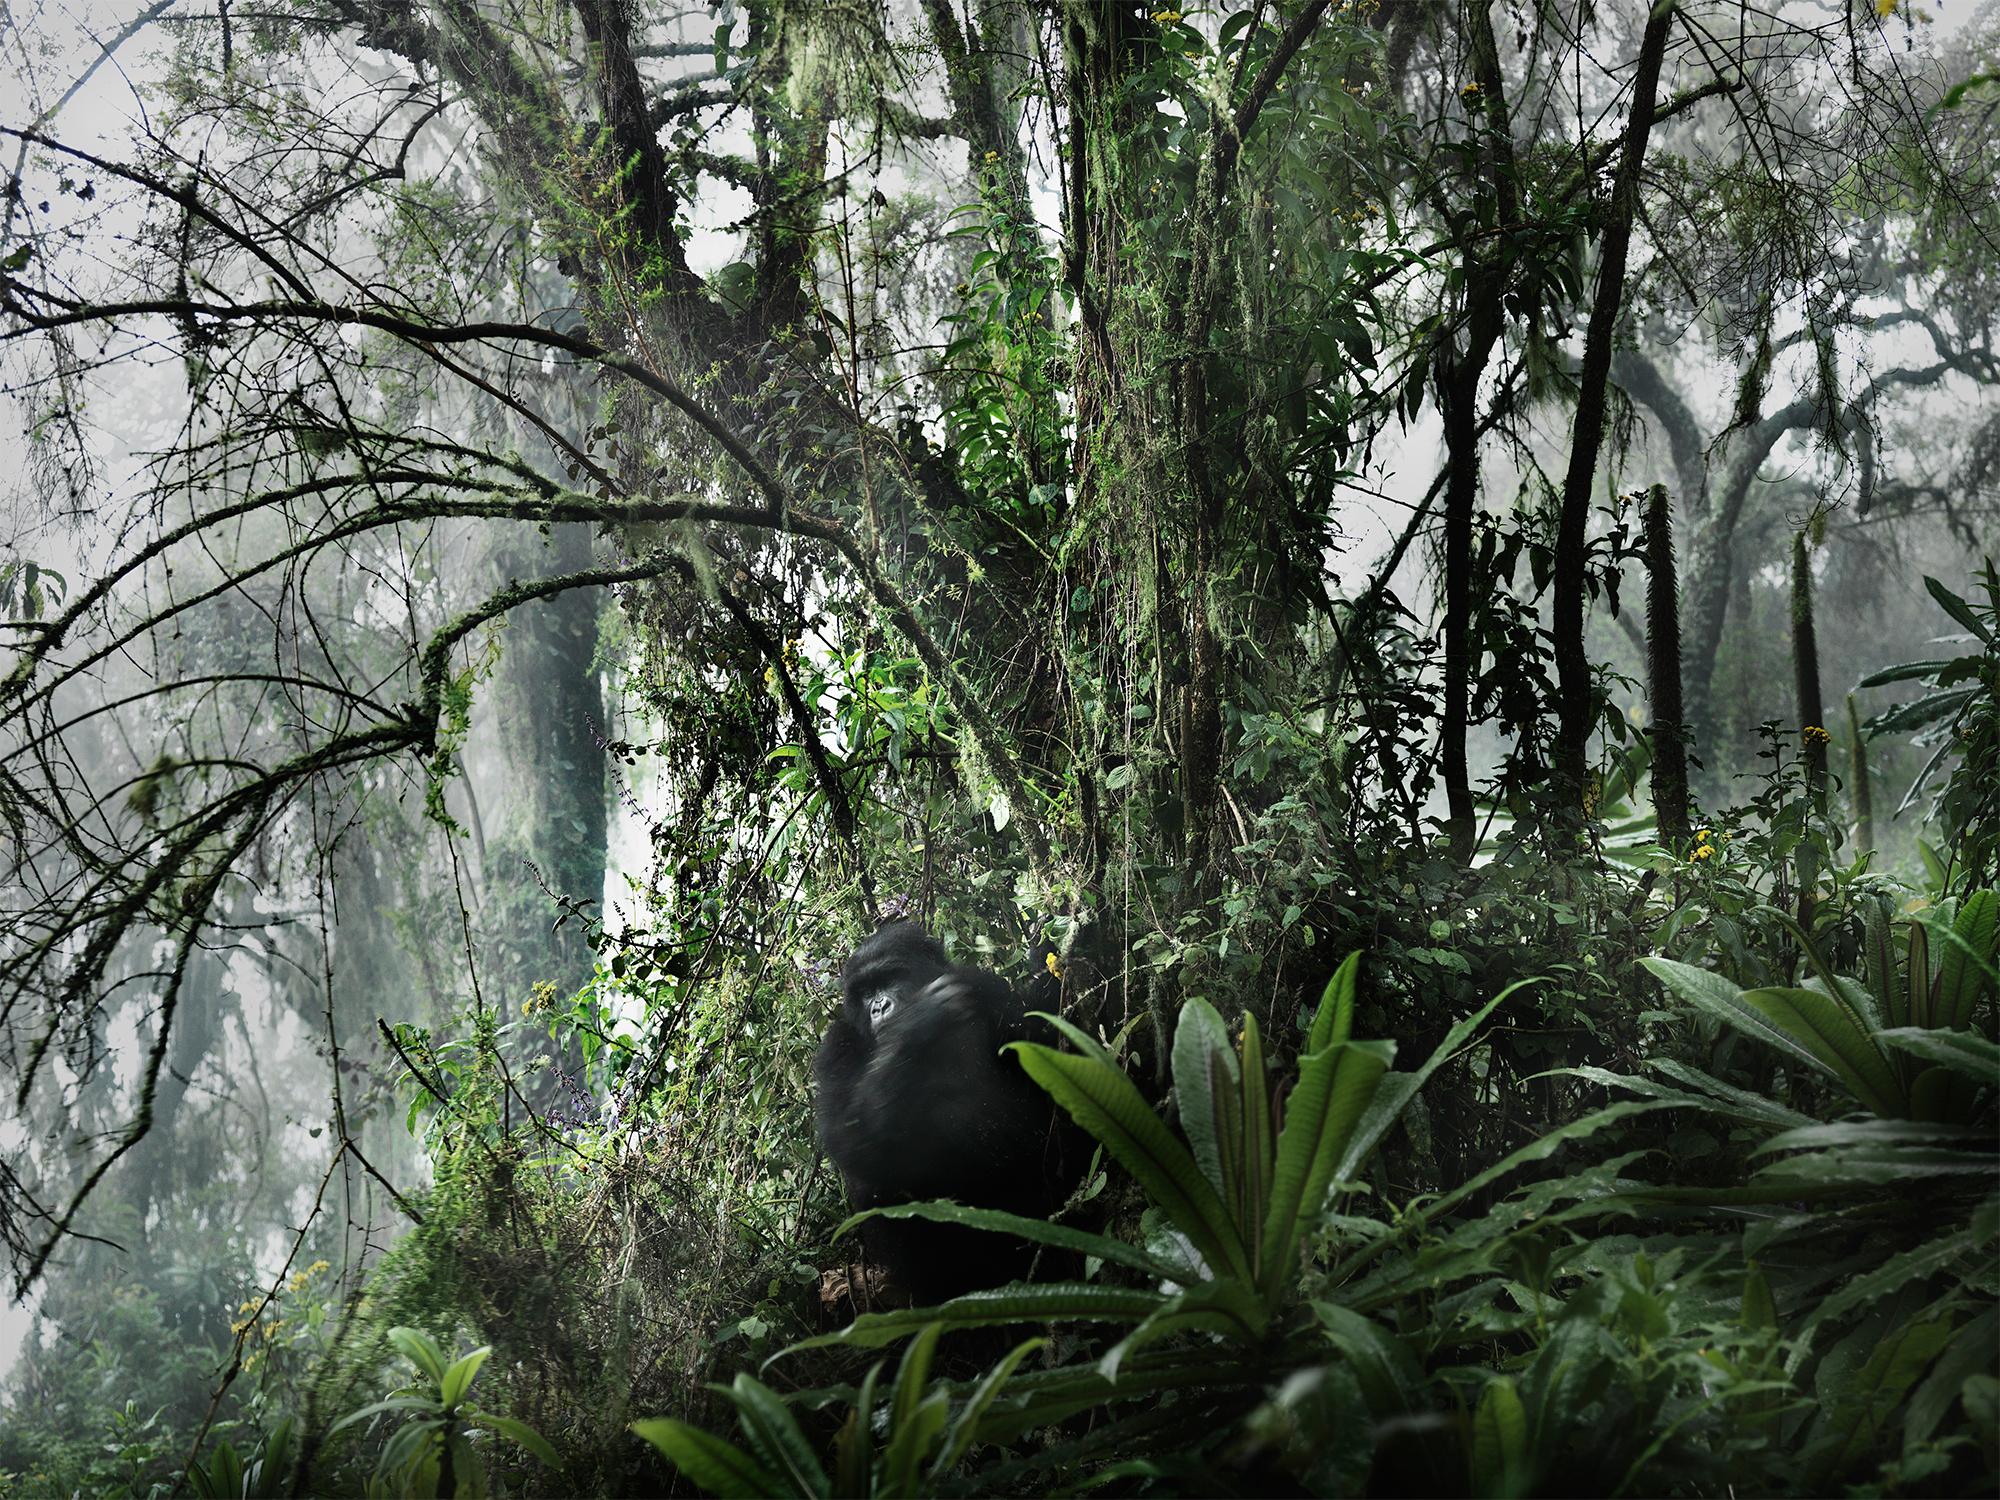 Joachim Schmeisser Color Photograph - Volcano II, animal, wildlife, color photography, gorilla, jungle, green